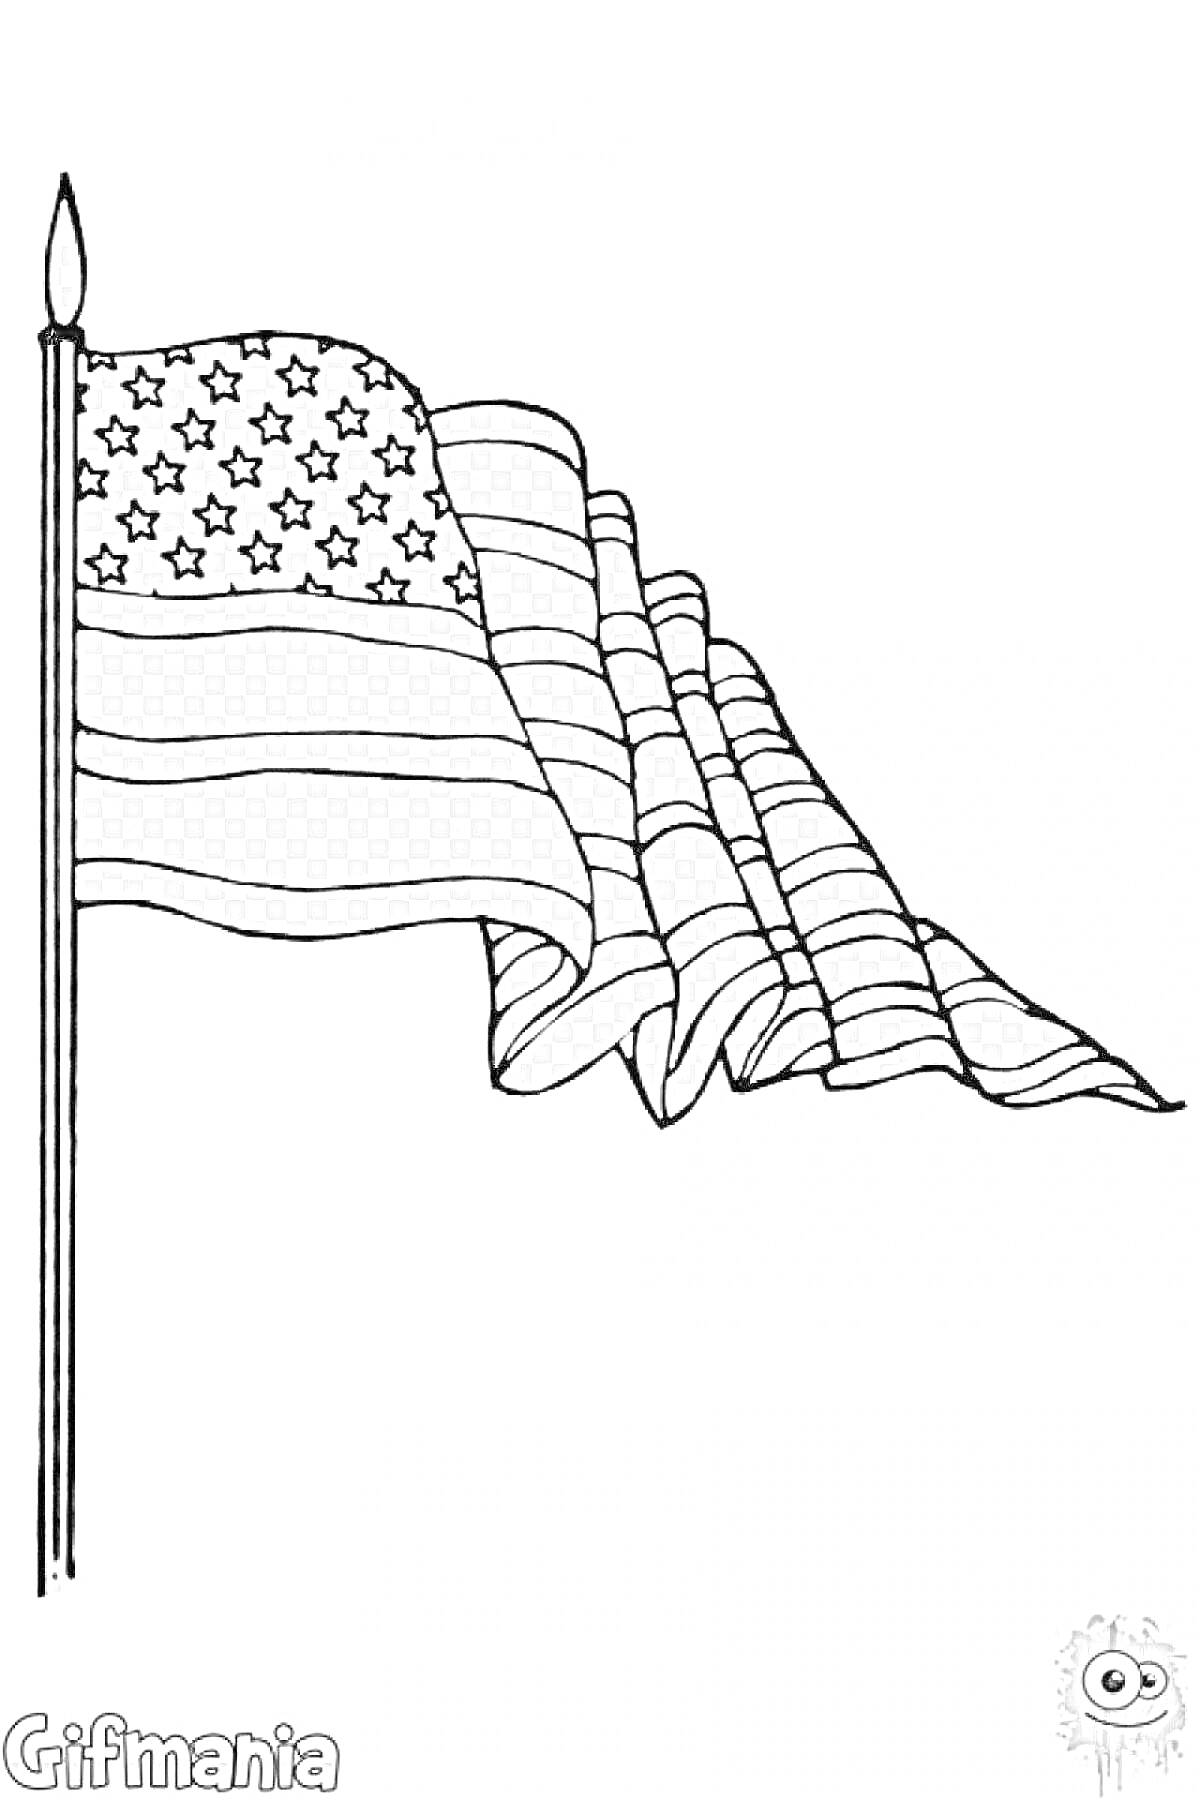 Раскраска флаг США на флагштоке с полосами и звездами